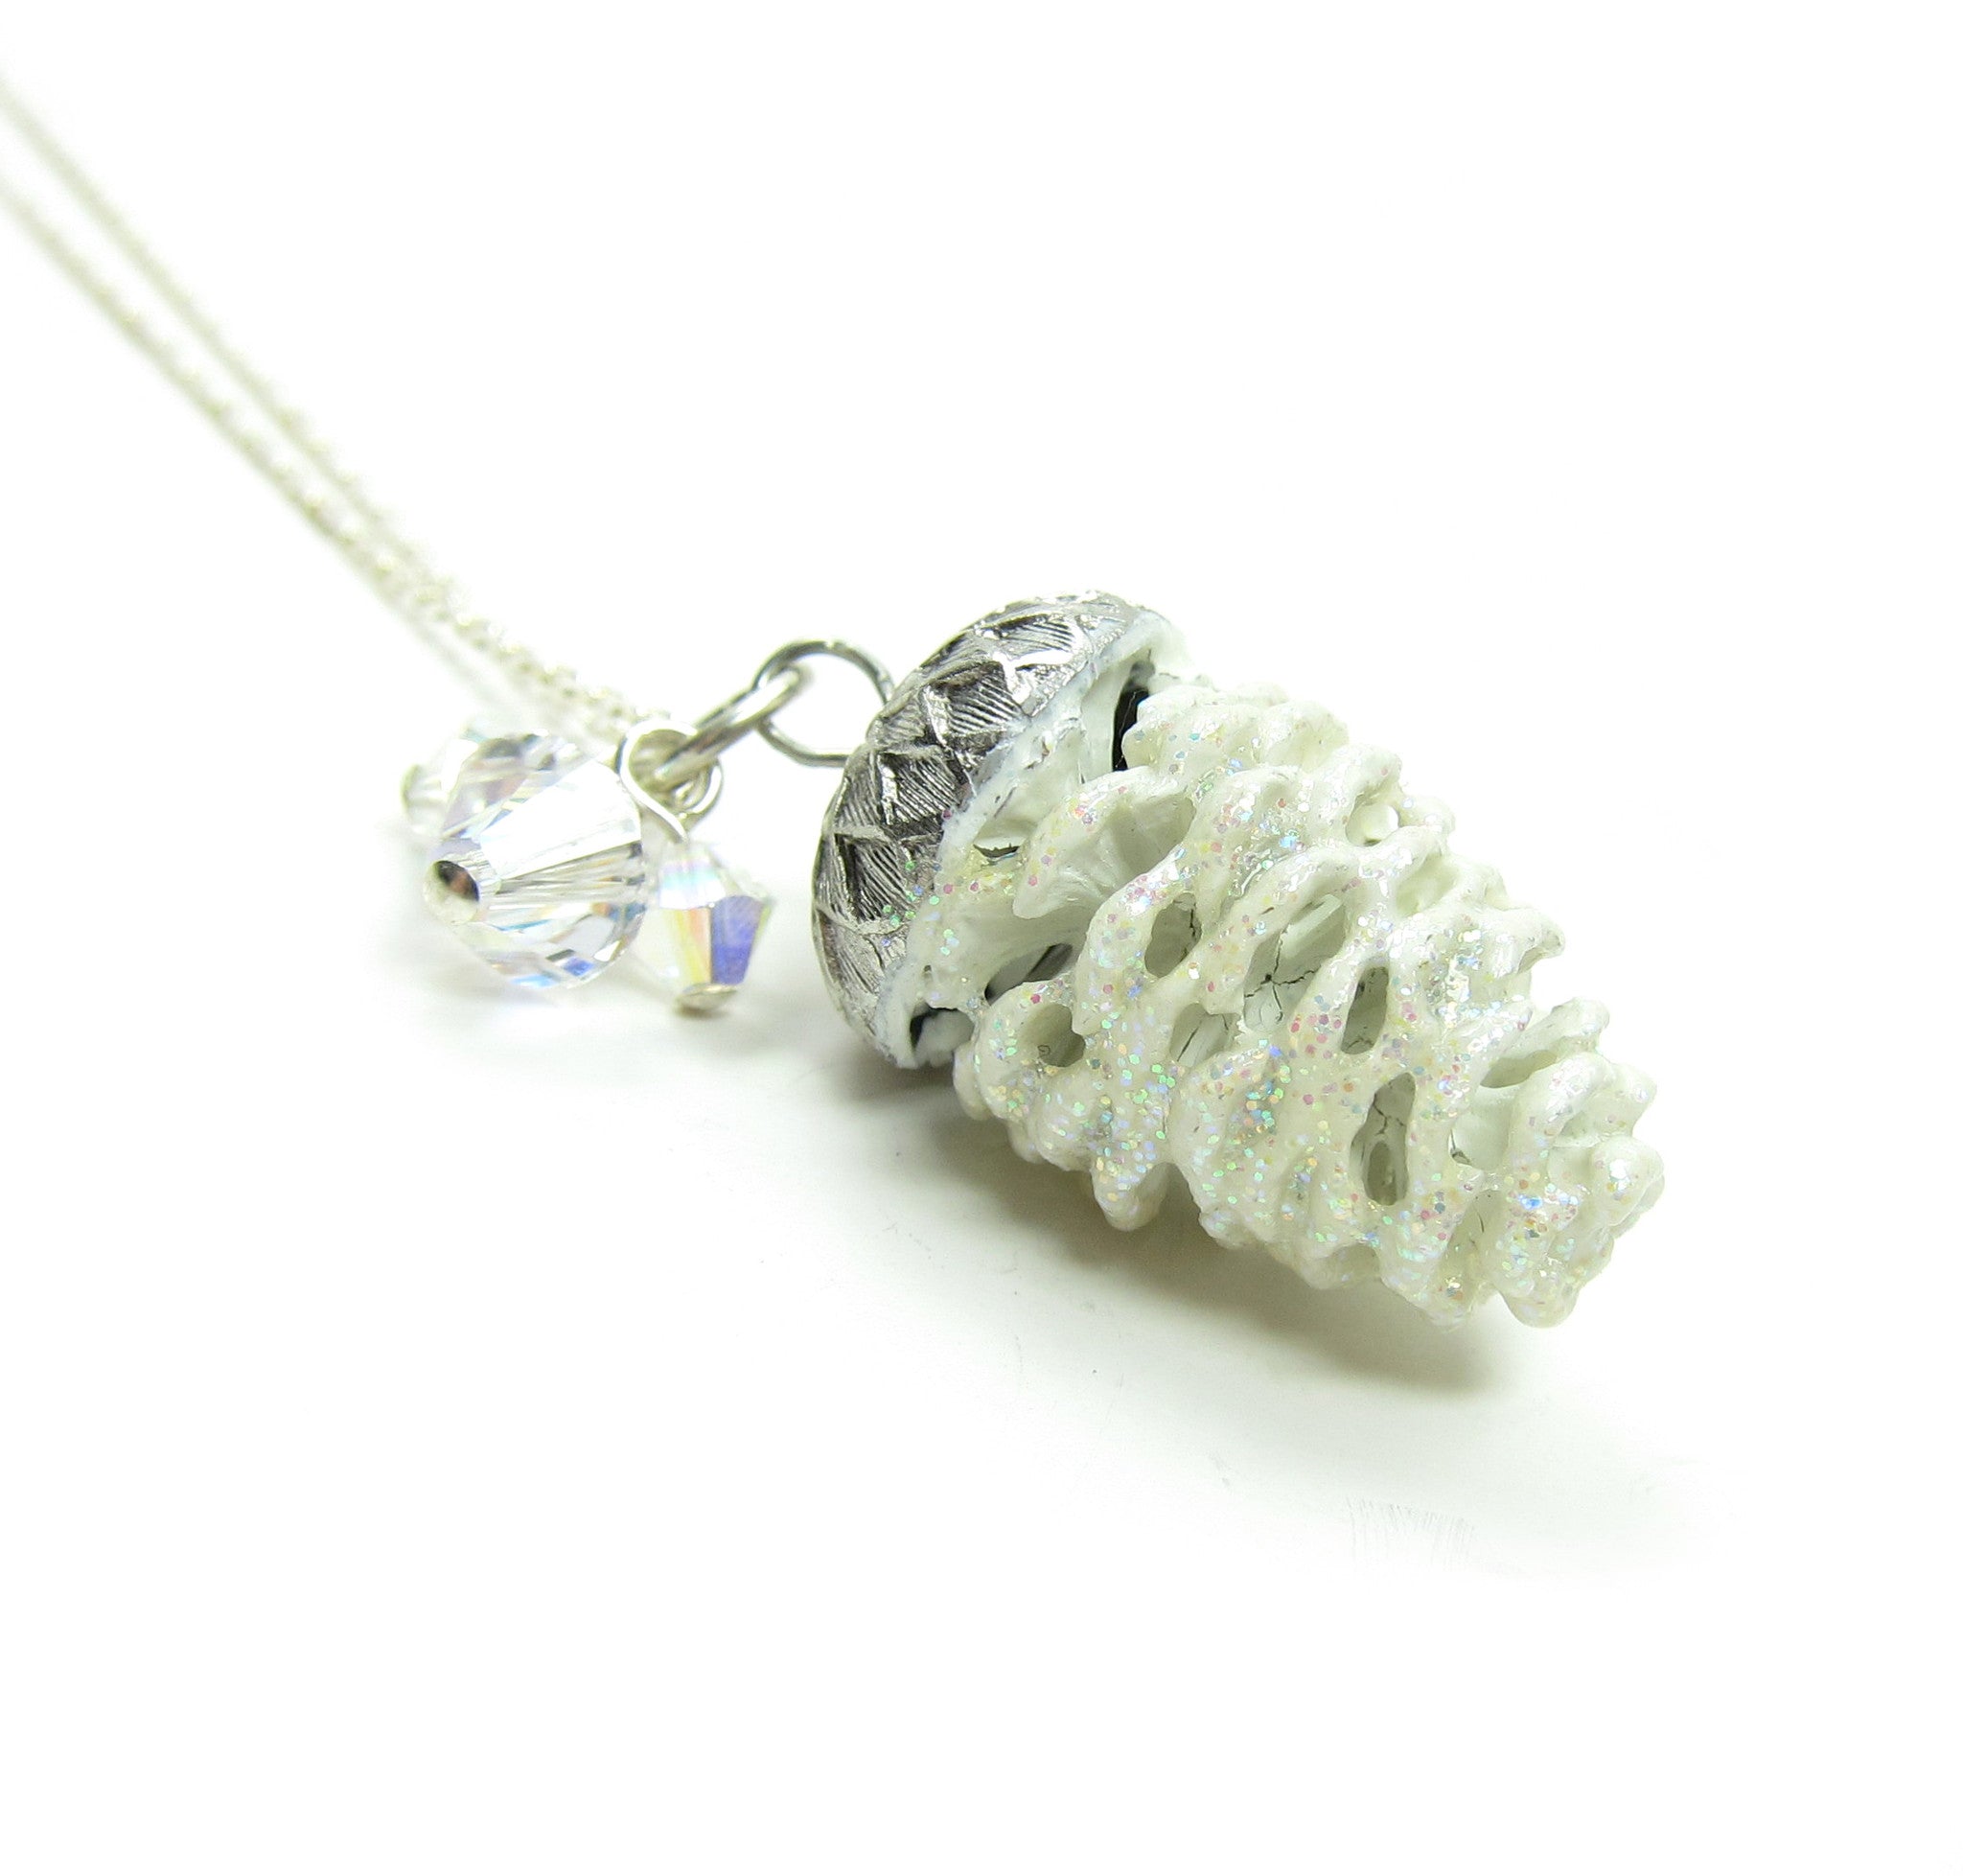 White pine cone necklace with Swarovski crystals